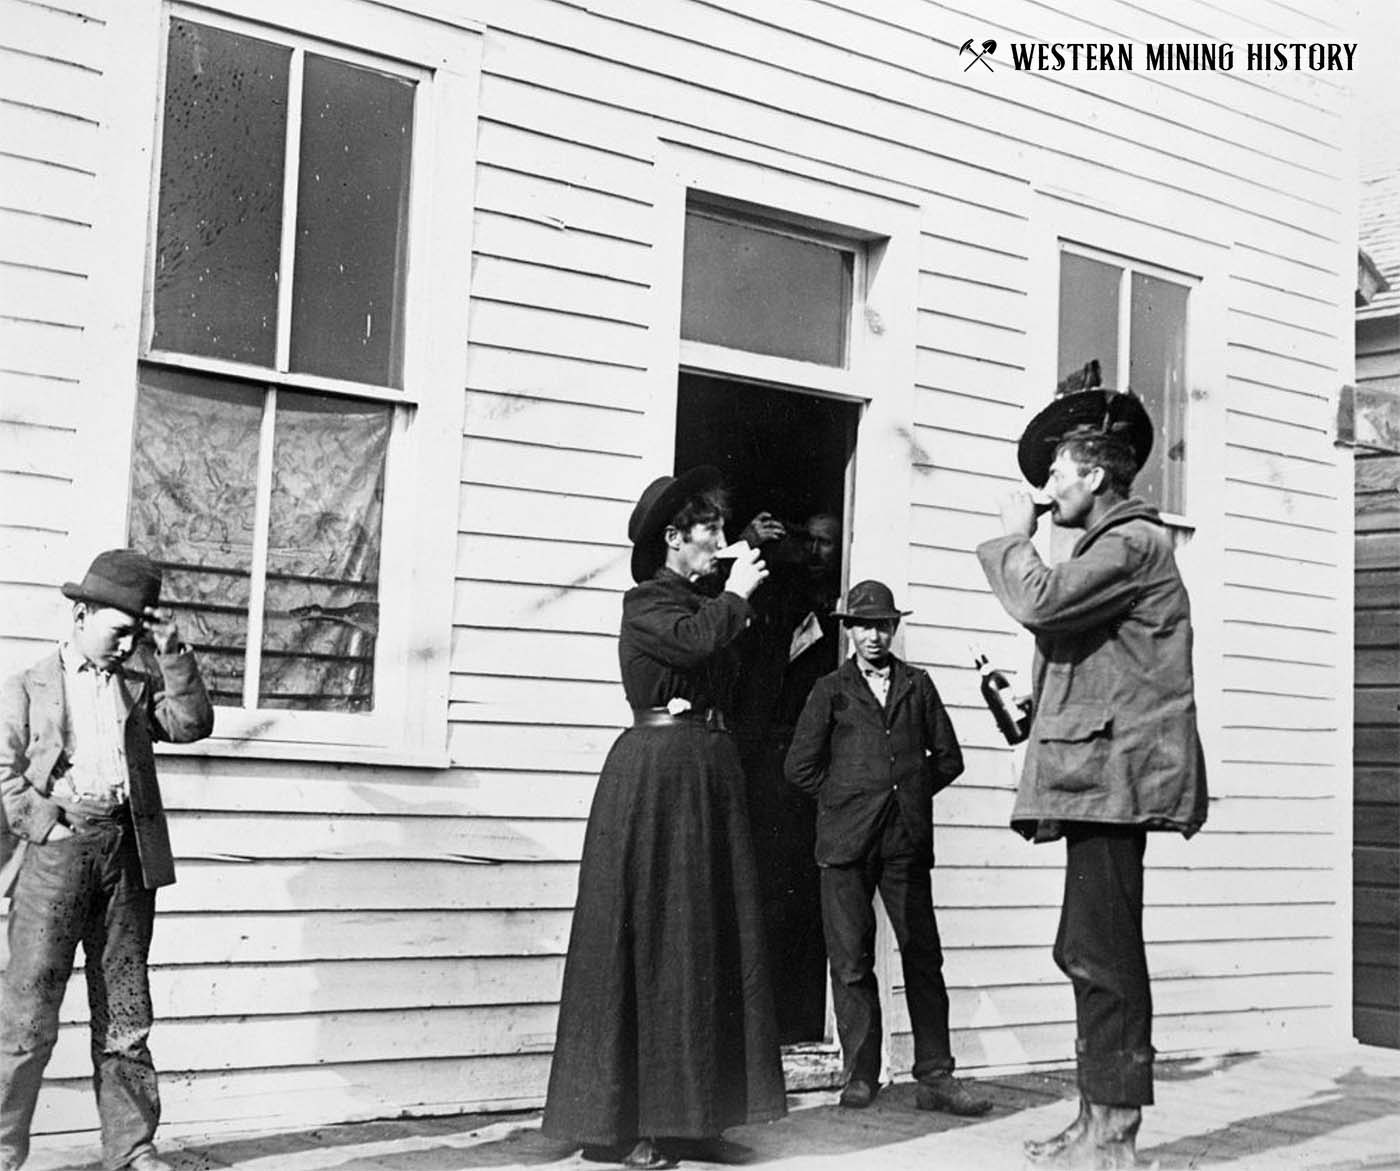 Calamity Jane at Gilt Edge, Montana ca. 1887